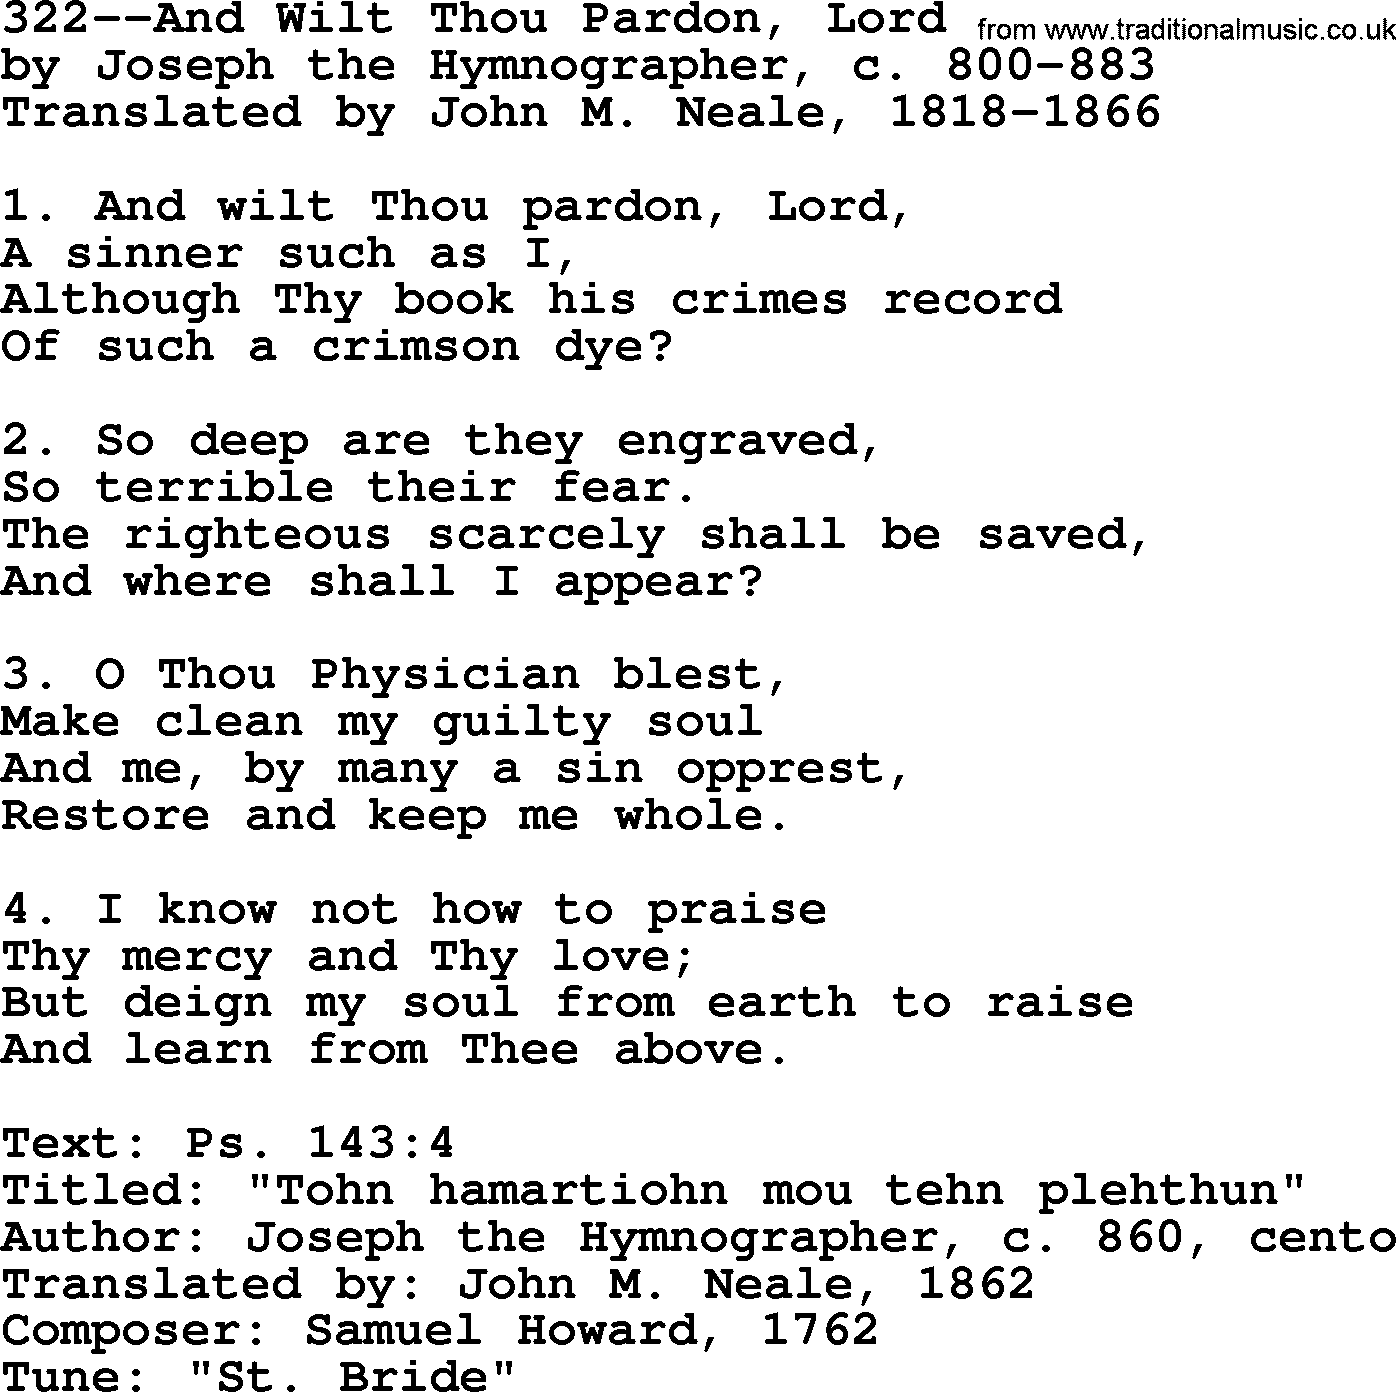 Lutheran Hymn: 322--And Wilt Thou Pardon, Lord.txt lyrics with PDF